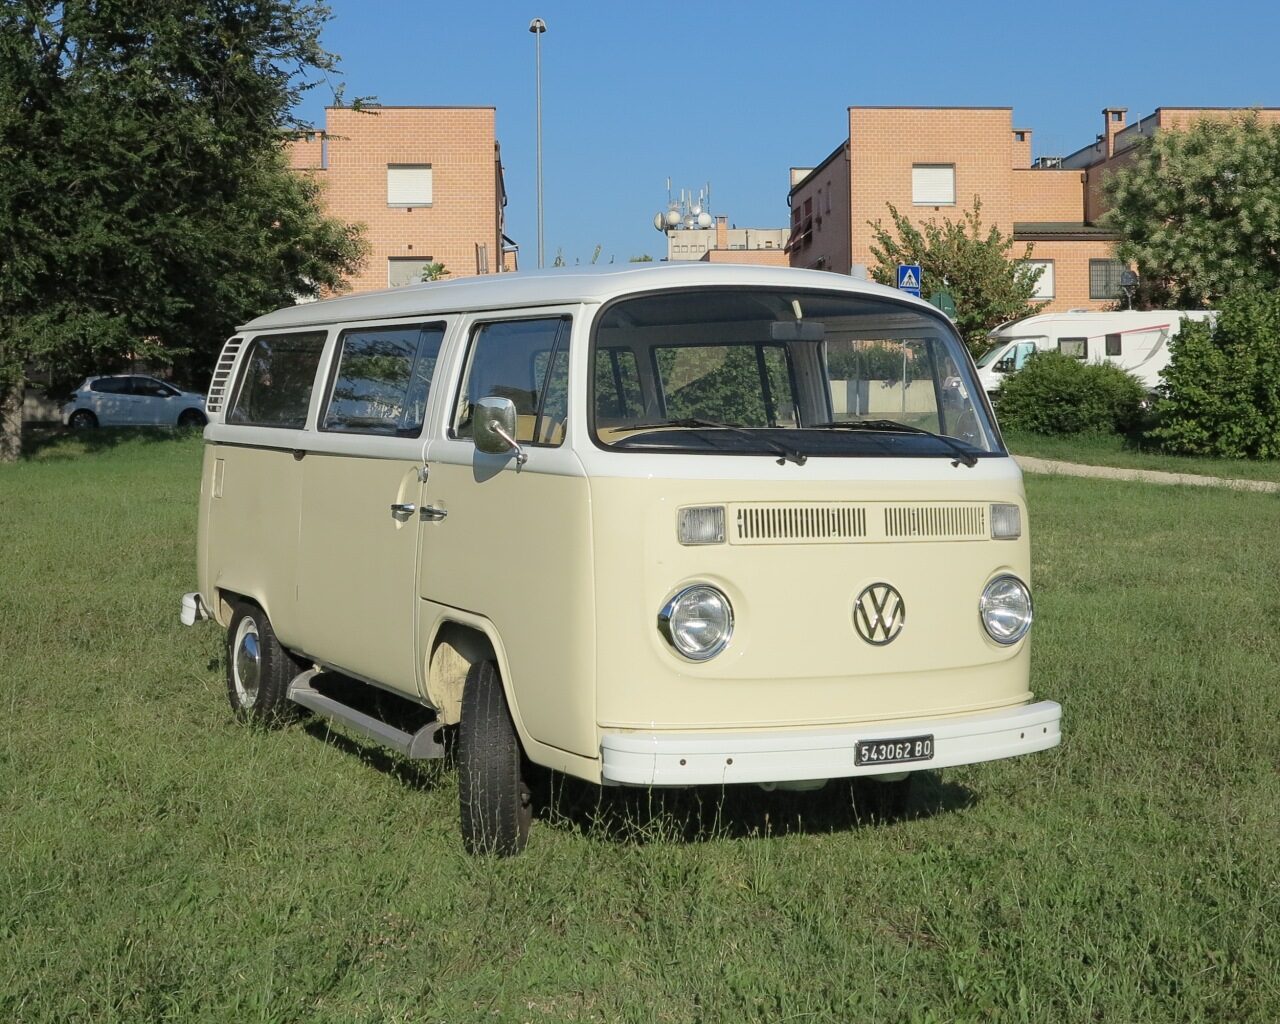 Volkswagen Transporter T2 - furgoncino hippie - vettura matrimonio - furgoncino per matrimonio